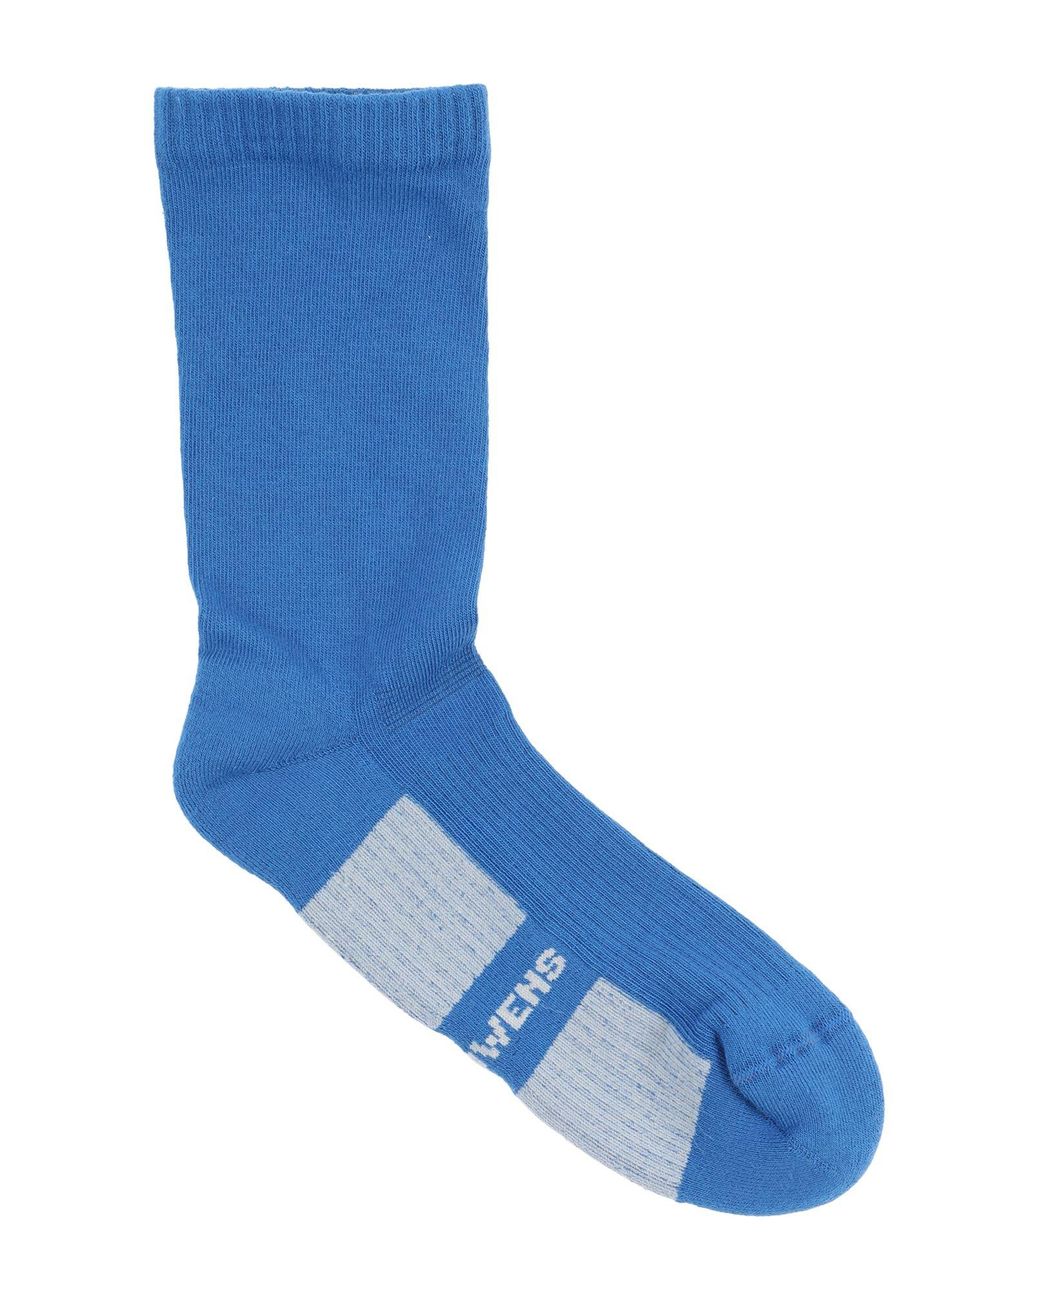 Rick Owens Cotton Short Socks in Blue for Men - Lyst